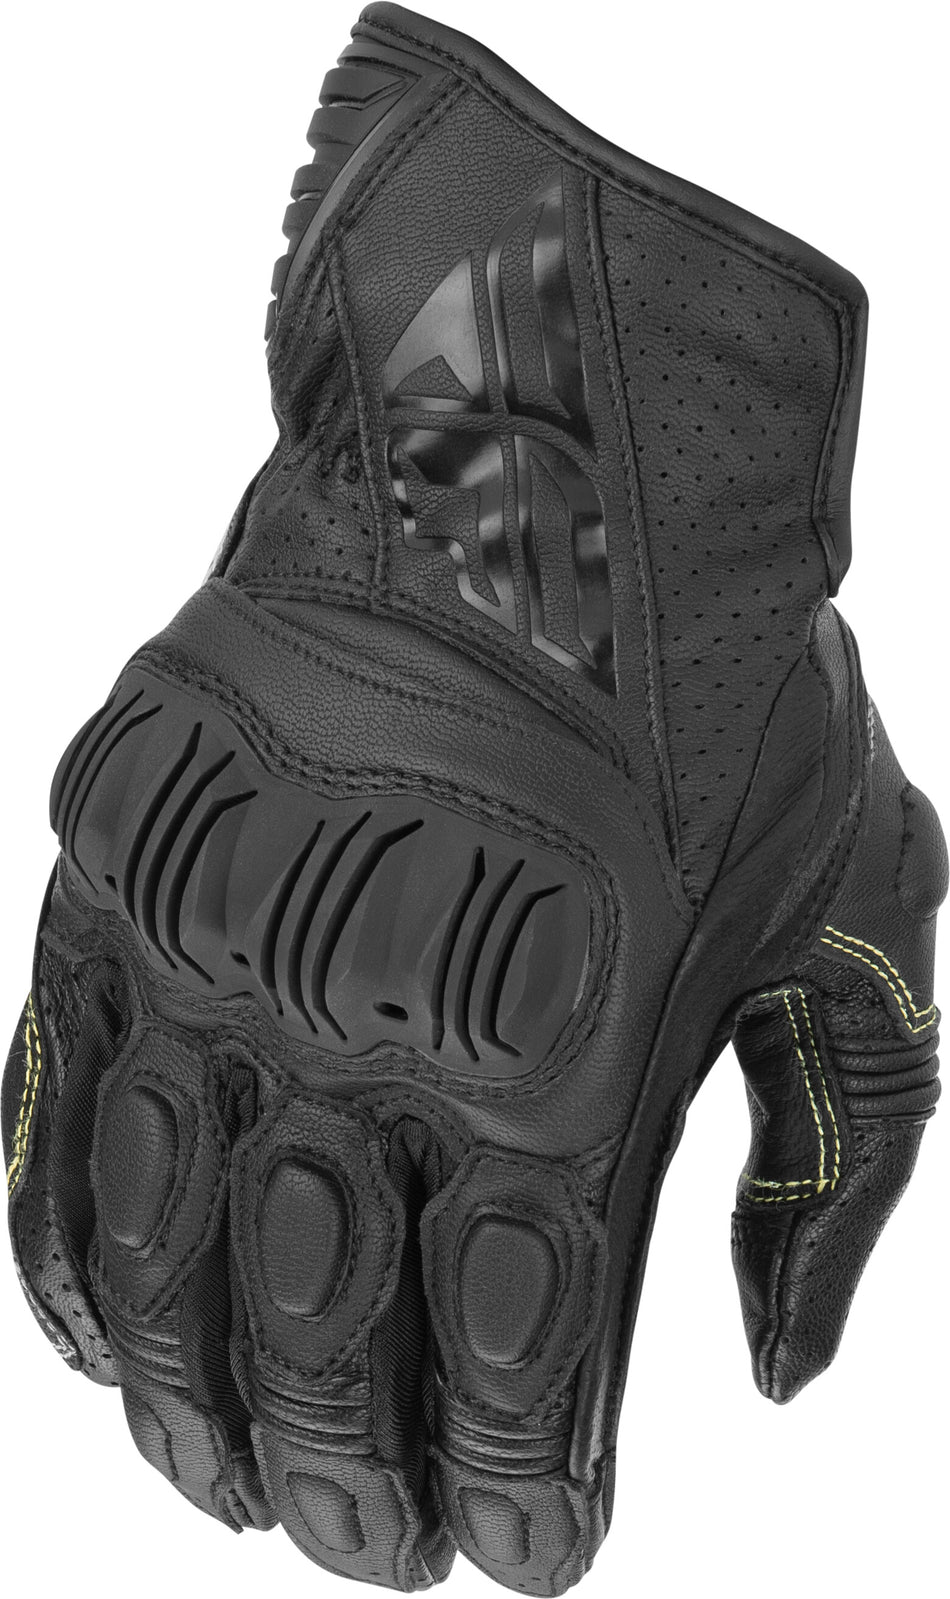 FLY RACING Brawler Gloves Black Xl 476-2090X